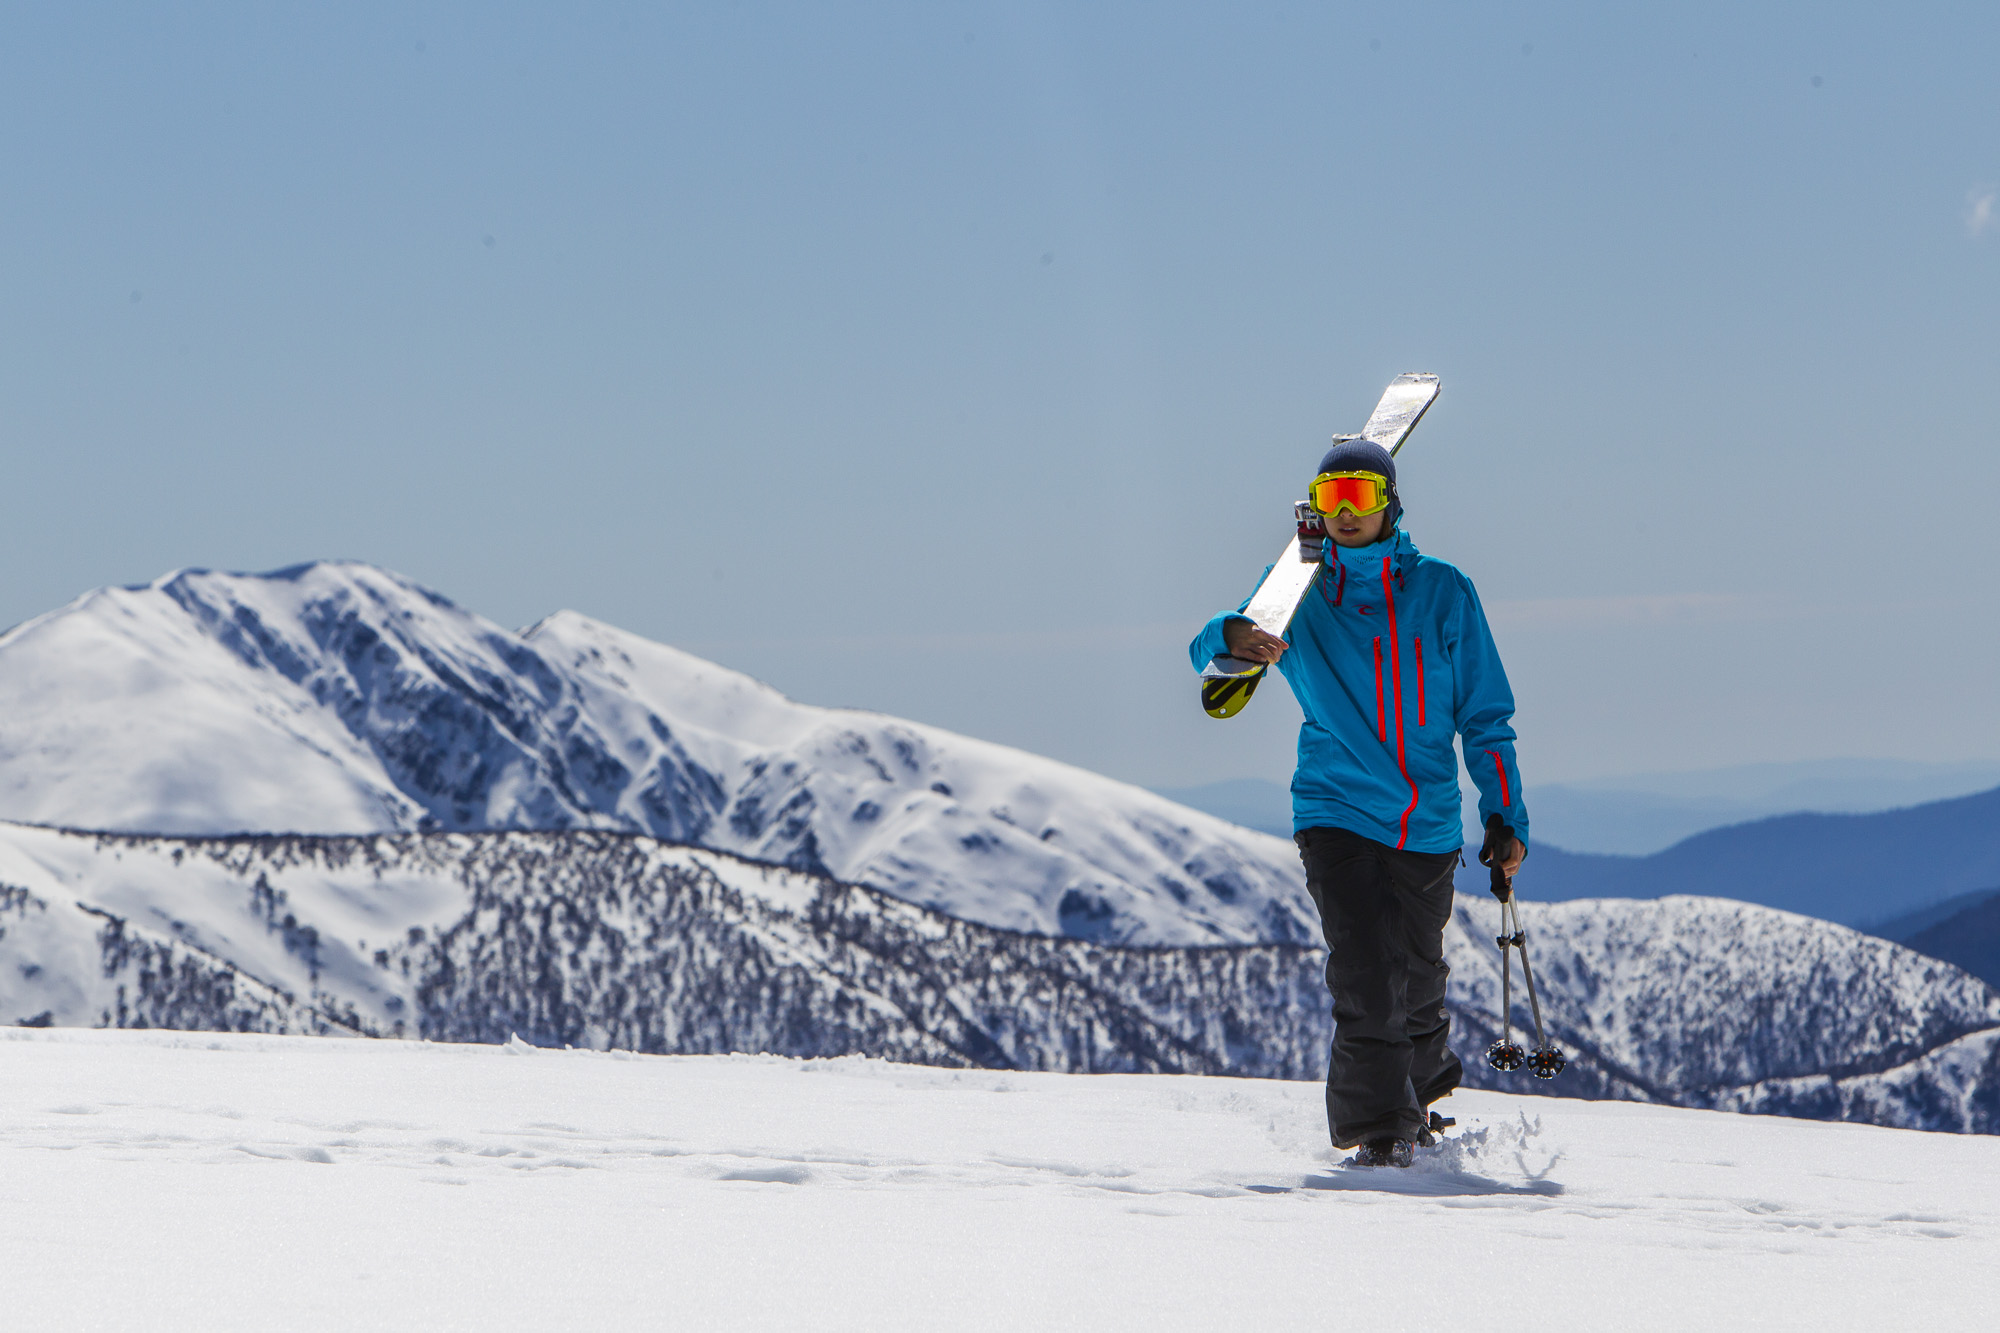 Australian Snow & Ski Student Tours WorldStrides Australia